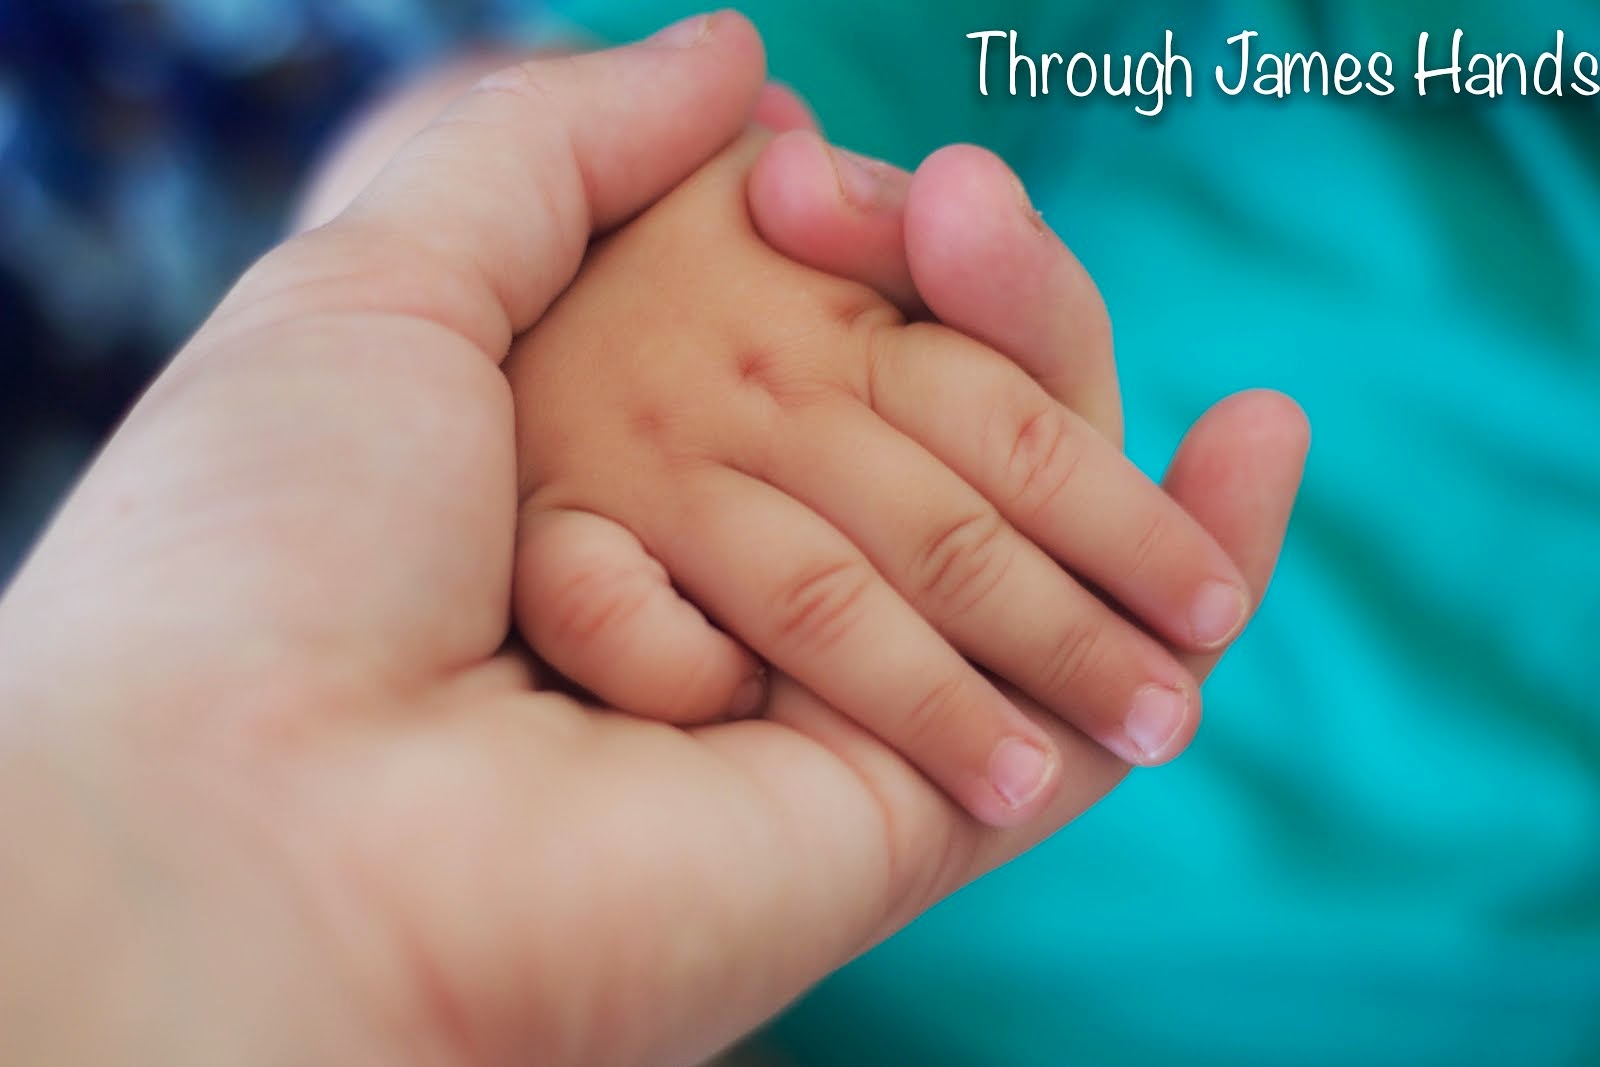 Through James' Hands